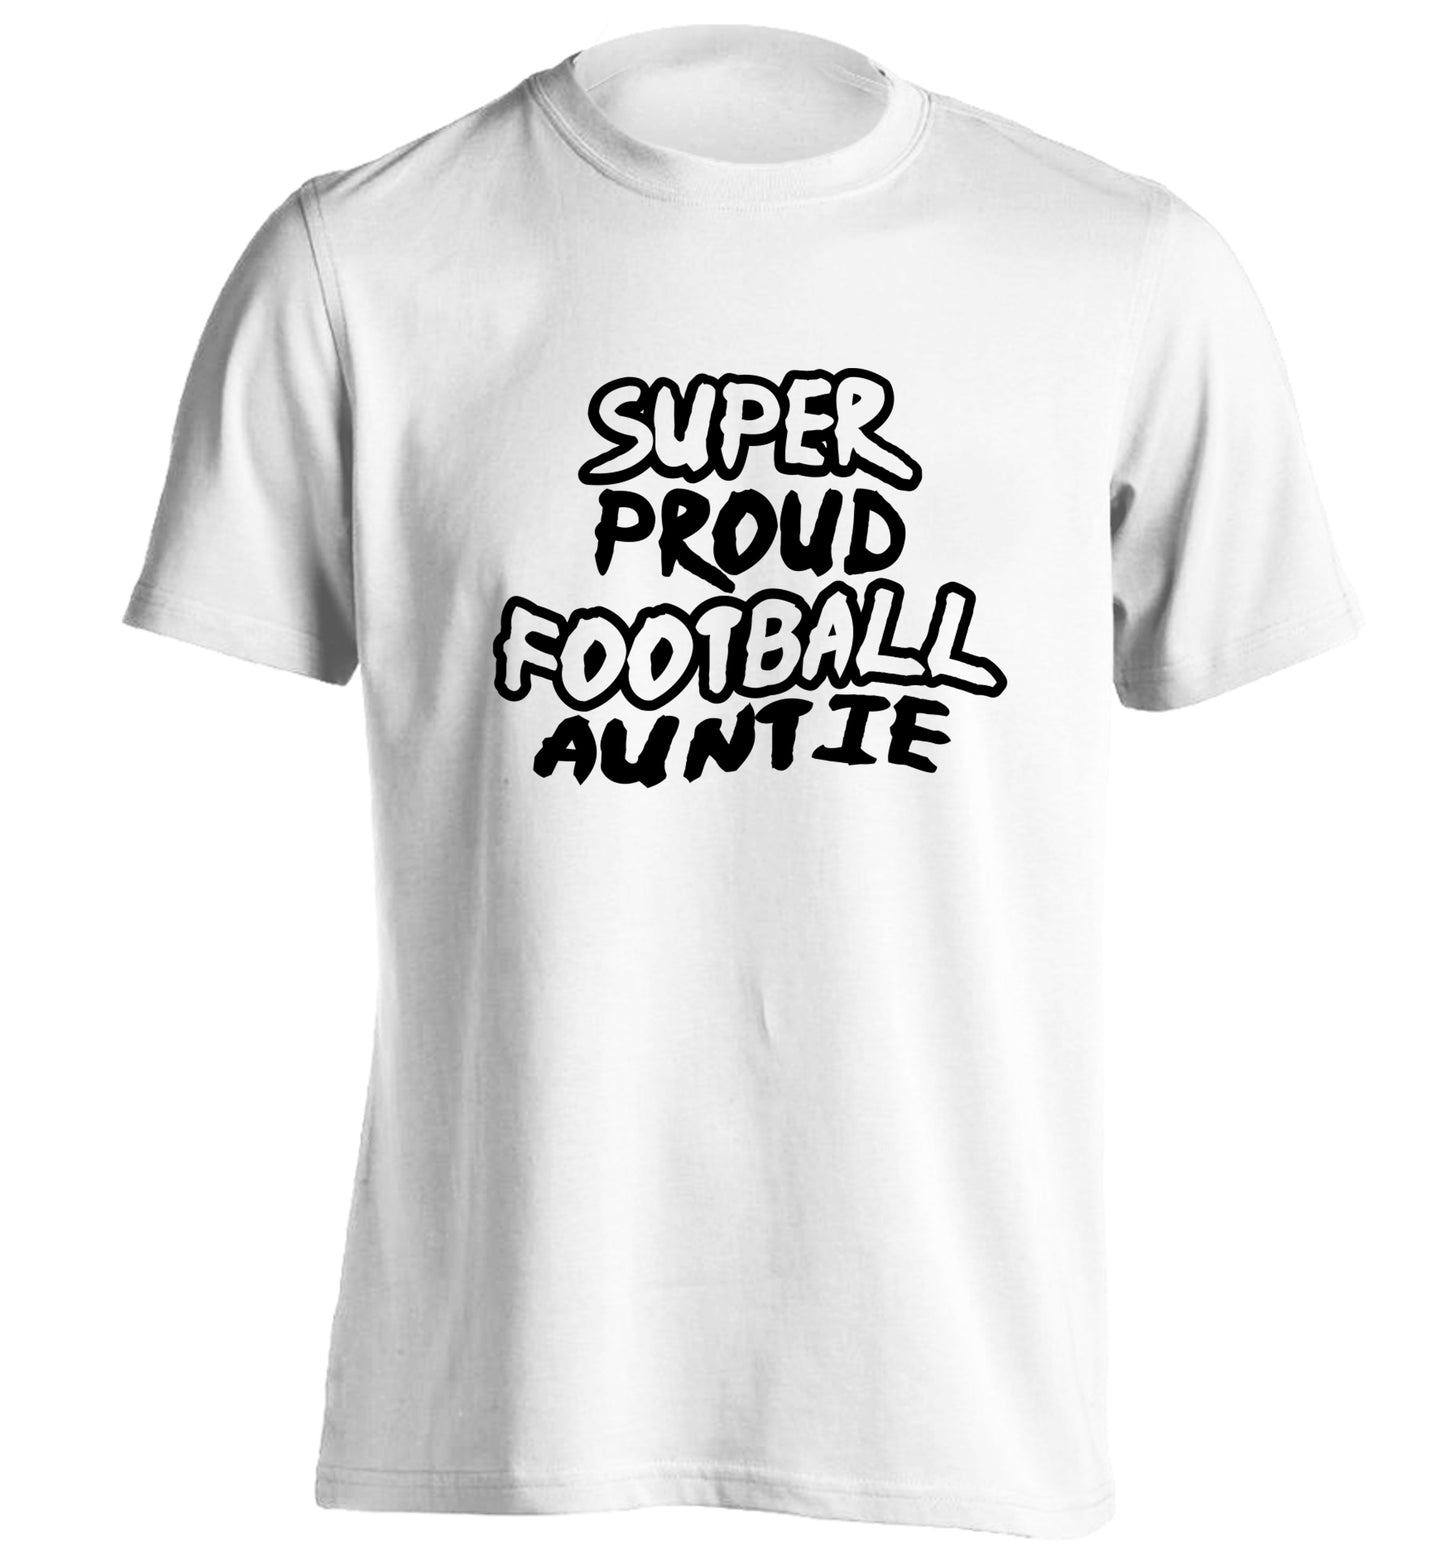 Super proud football auntie adults unisexwhite Tshirt 2XL